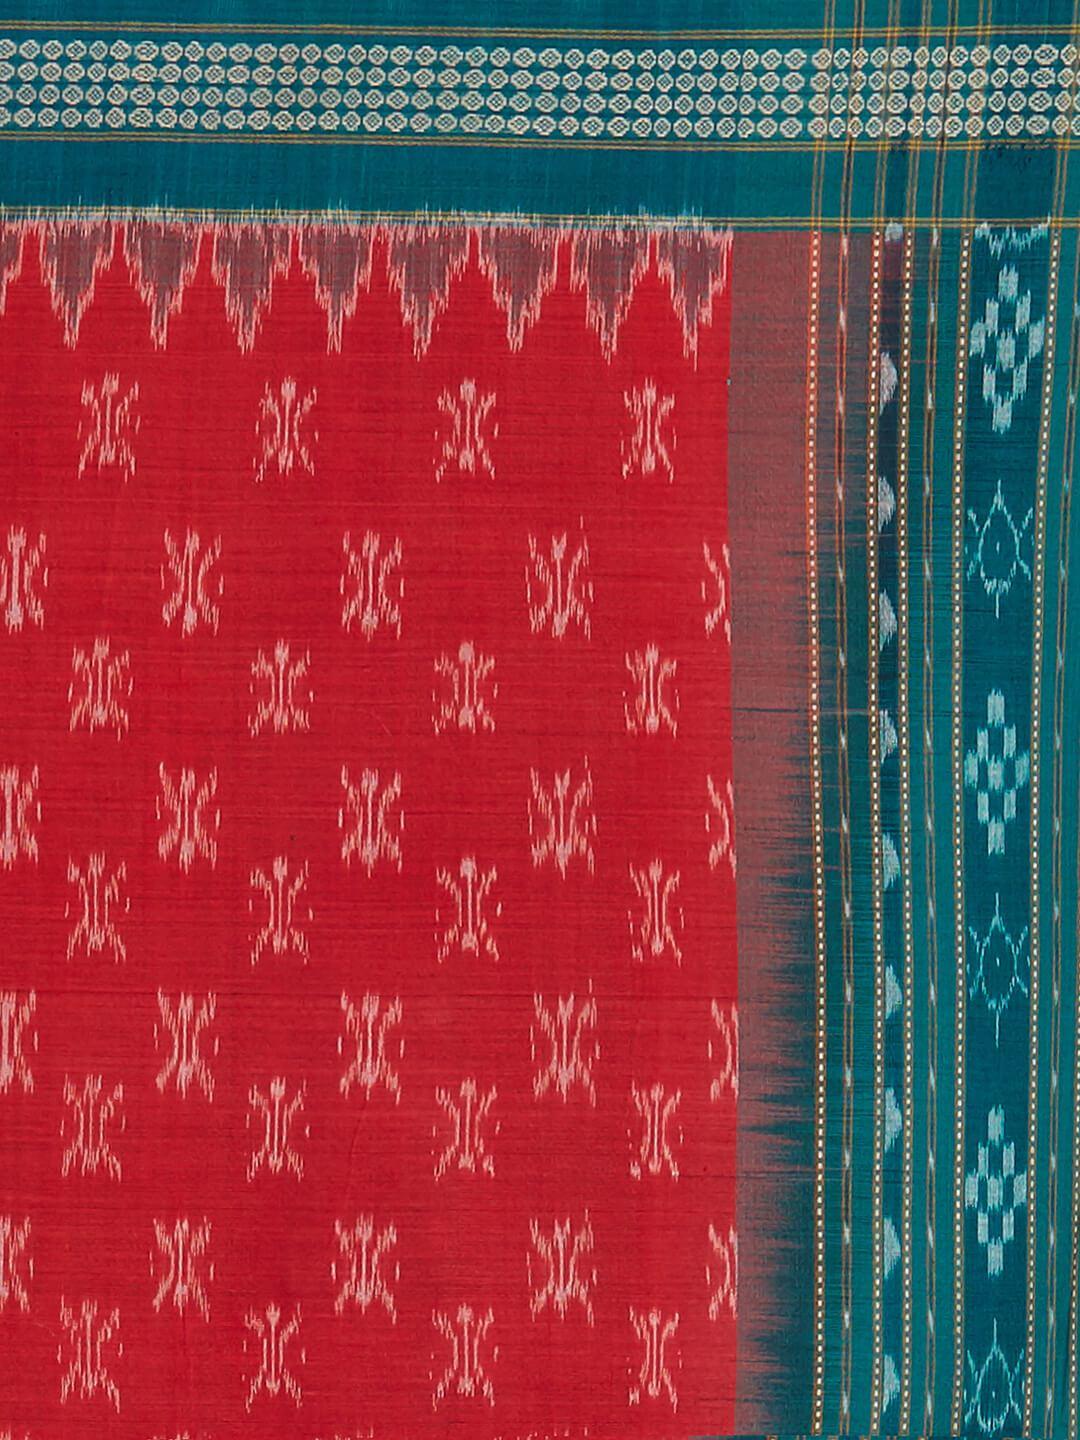 CraftsCollection.in - Red and Green Sambalpuri Cotton Dupatta